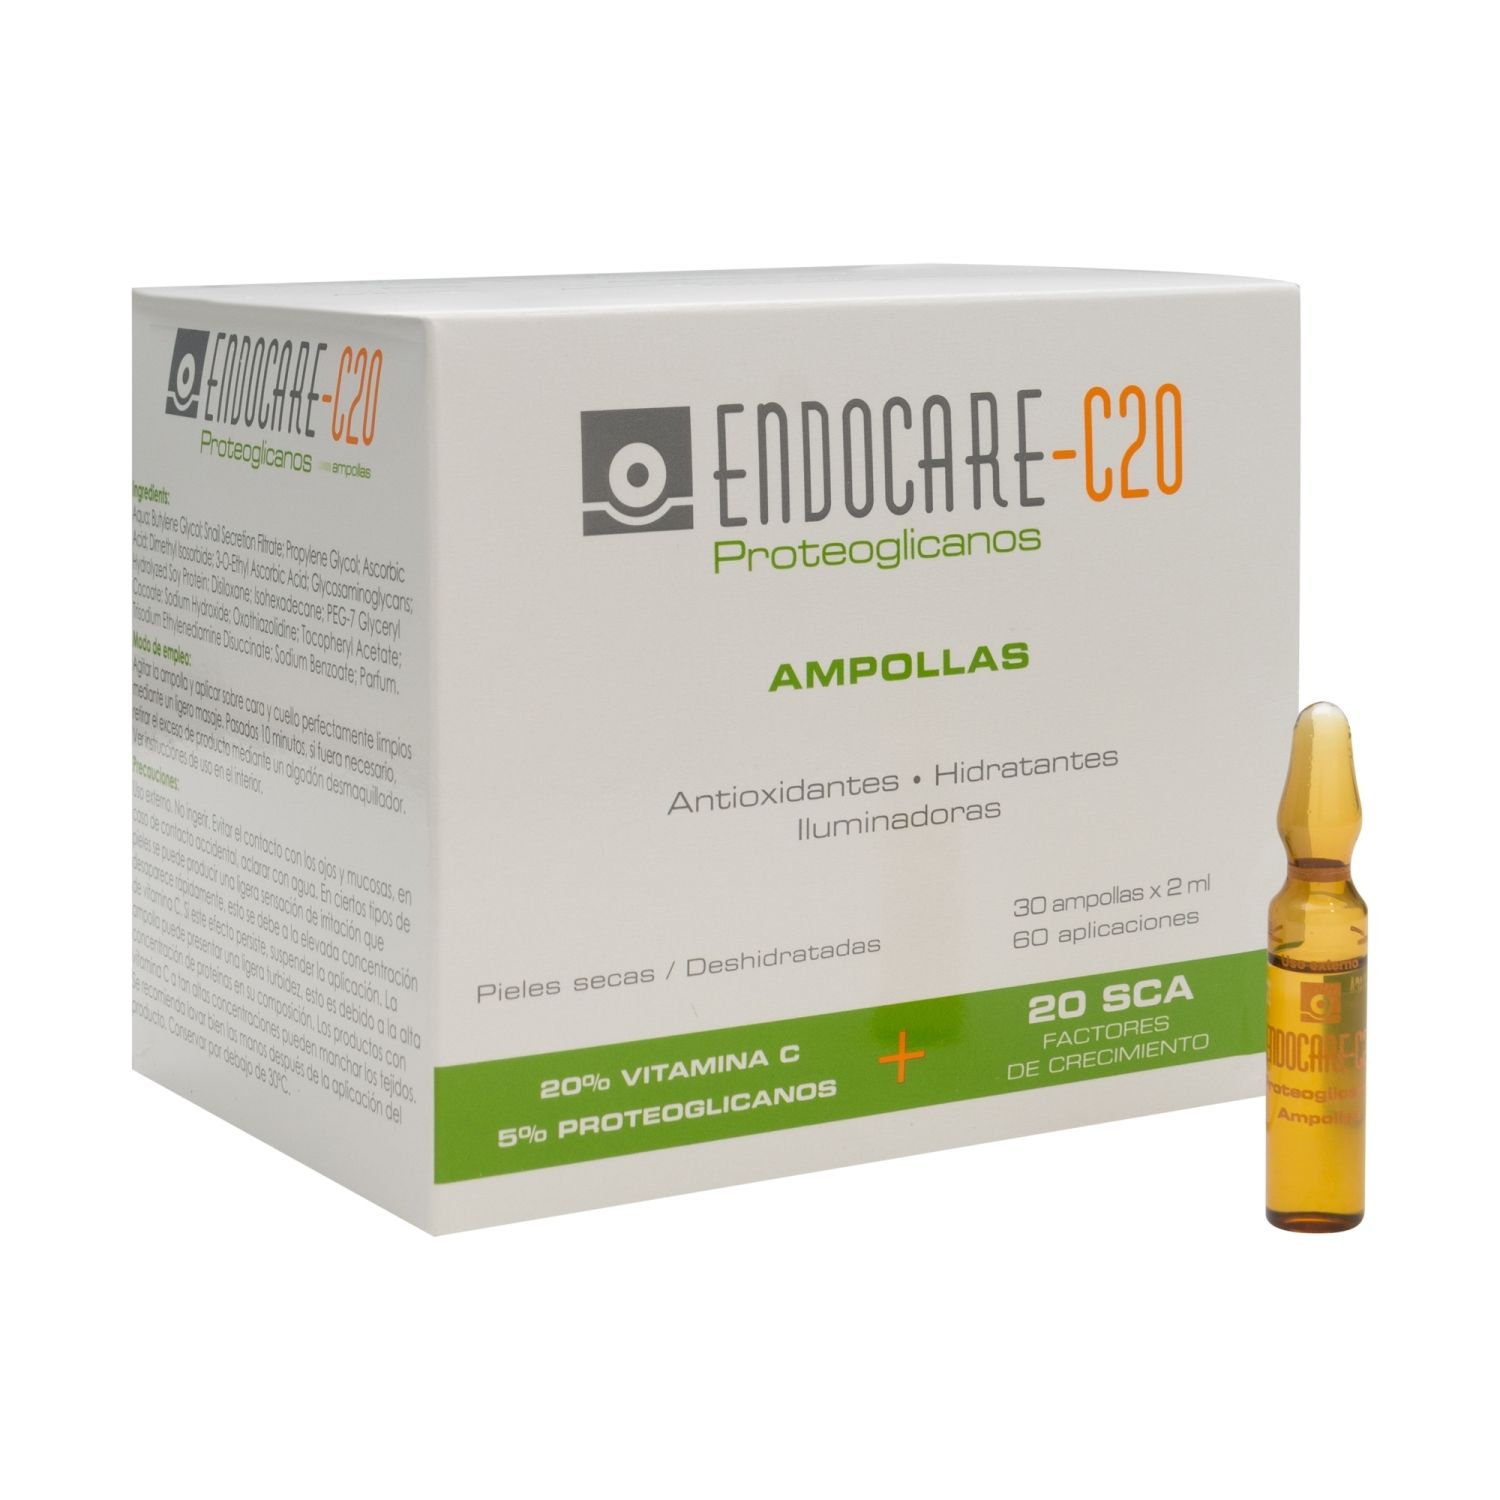 endocare c20 proteoglicanos 30amp